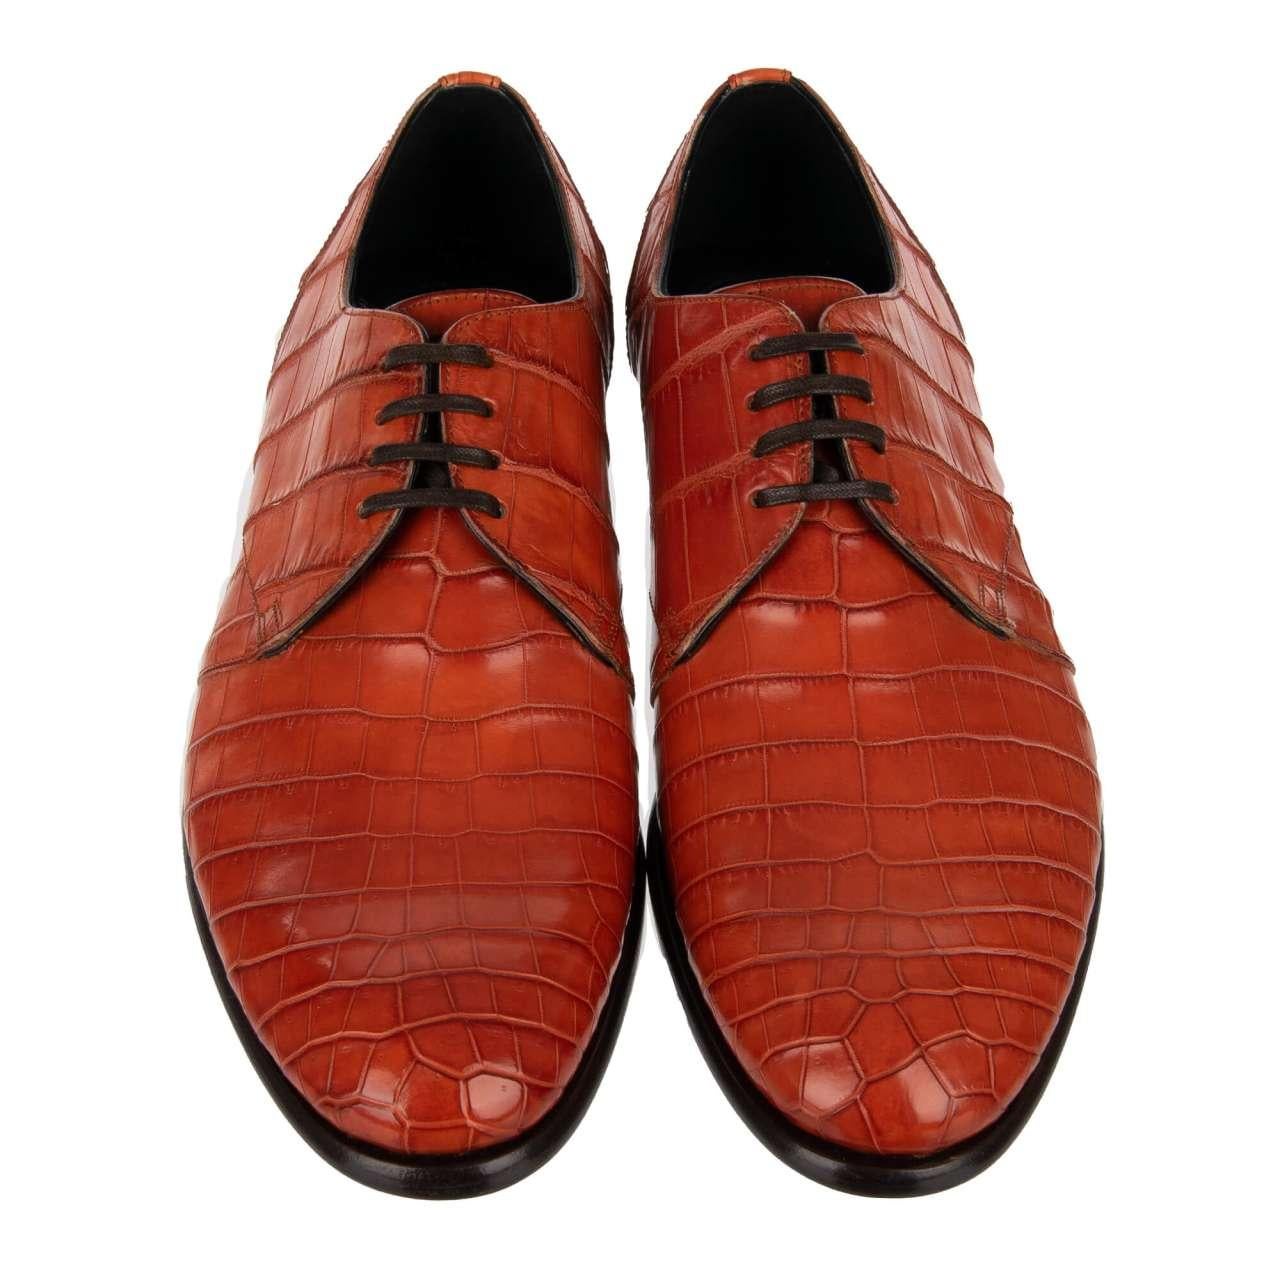 Dolce & Gabbana Formal Crocodile Leather Derby Shoes NAPOLI Orange EUR 41 For Sale 2